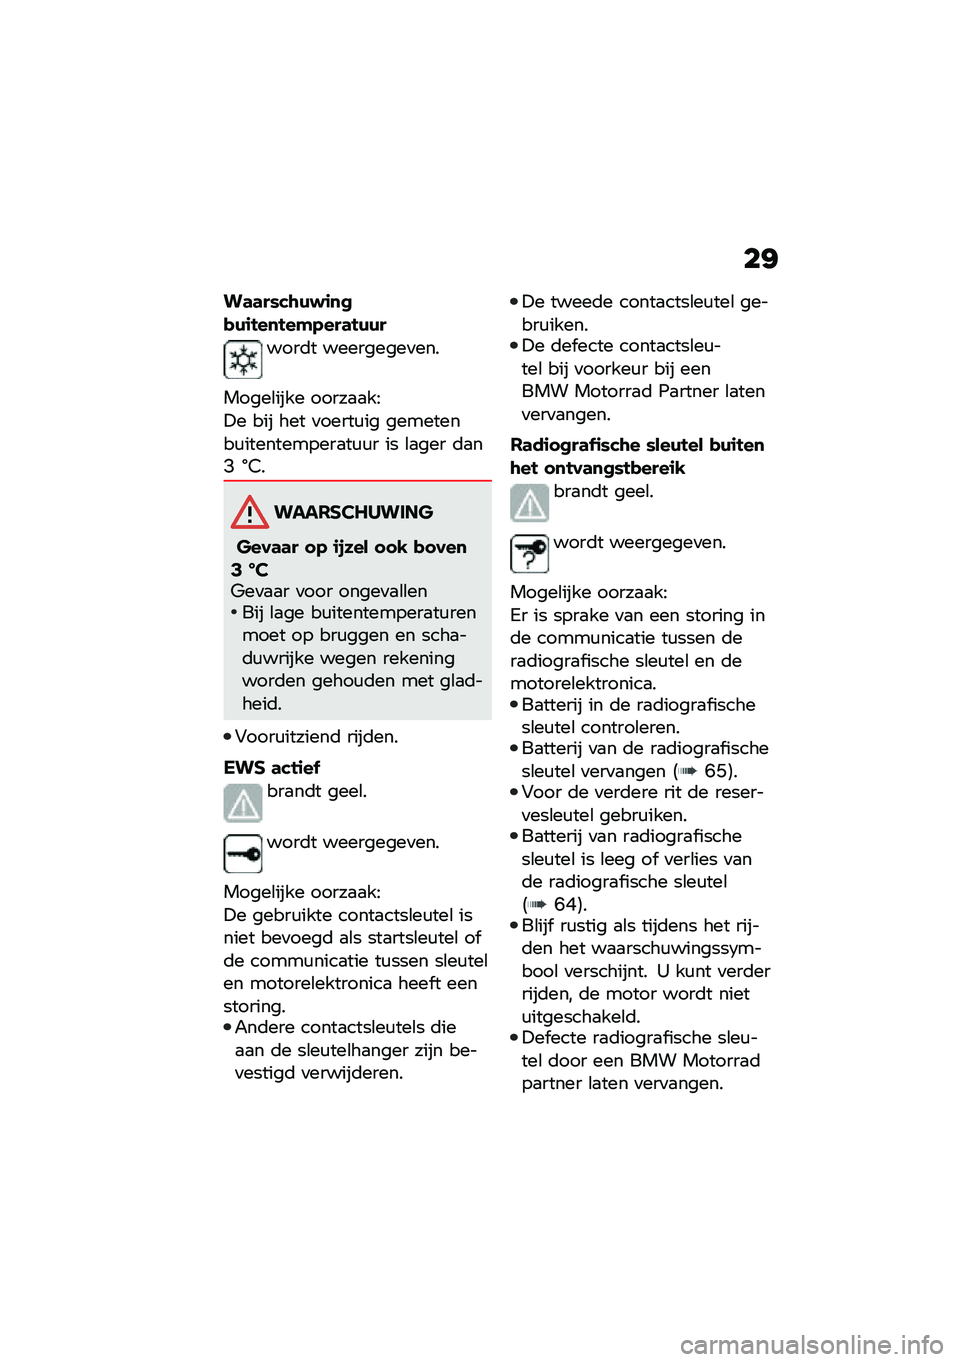 BMW MOTORRAD C 400 GT 2020  Handleiding (in Dutch) ��;
��	�	��*��\b�)�$�\f�
�
�"�)�\f�!��
�!��#�.���	�!�)�)�
����	� ���������
���
�����\b���� �����
�
��>
�!� ��� ��� �
�����\f�� ���������\f��